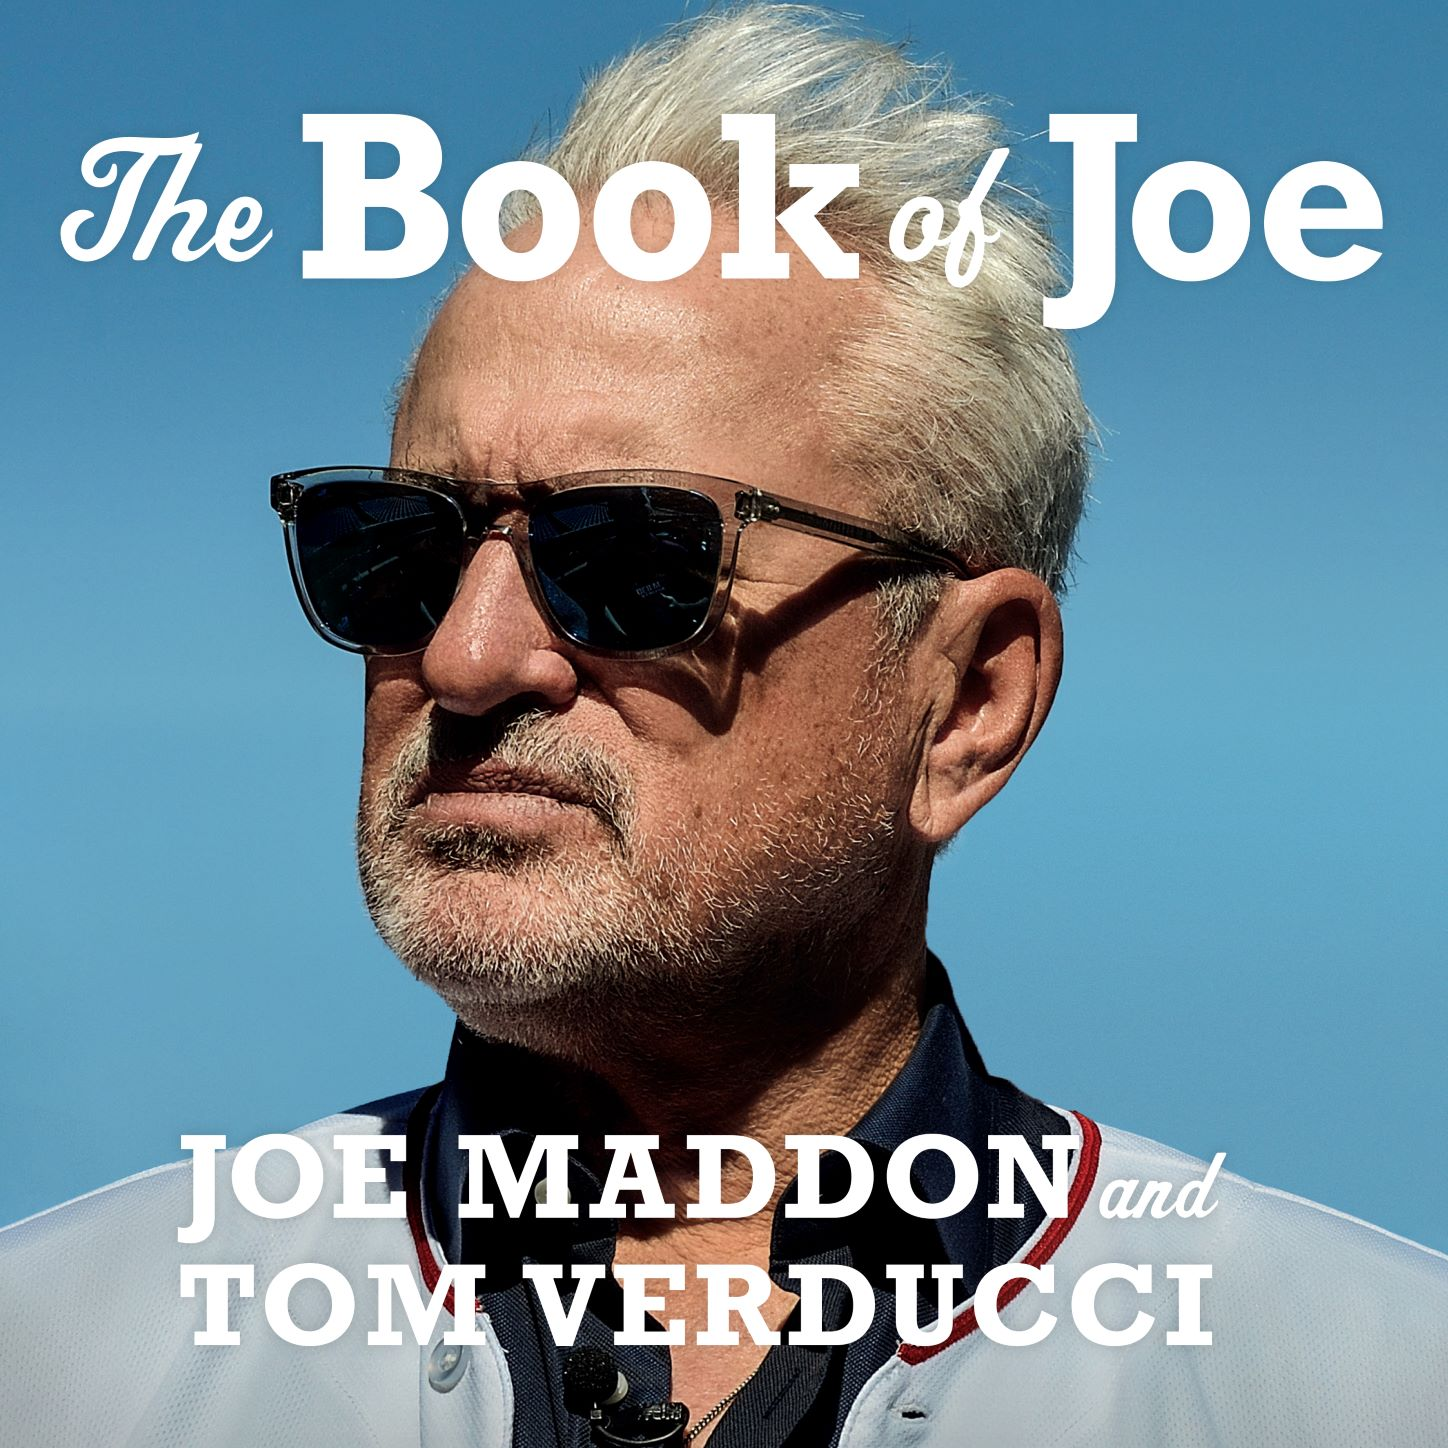 Introducing The Book of Joe with Joe Maddon & Tom Verducci